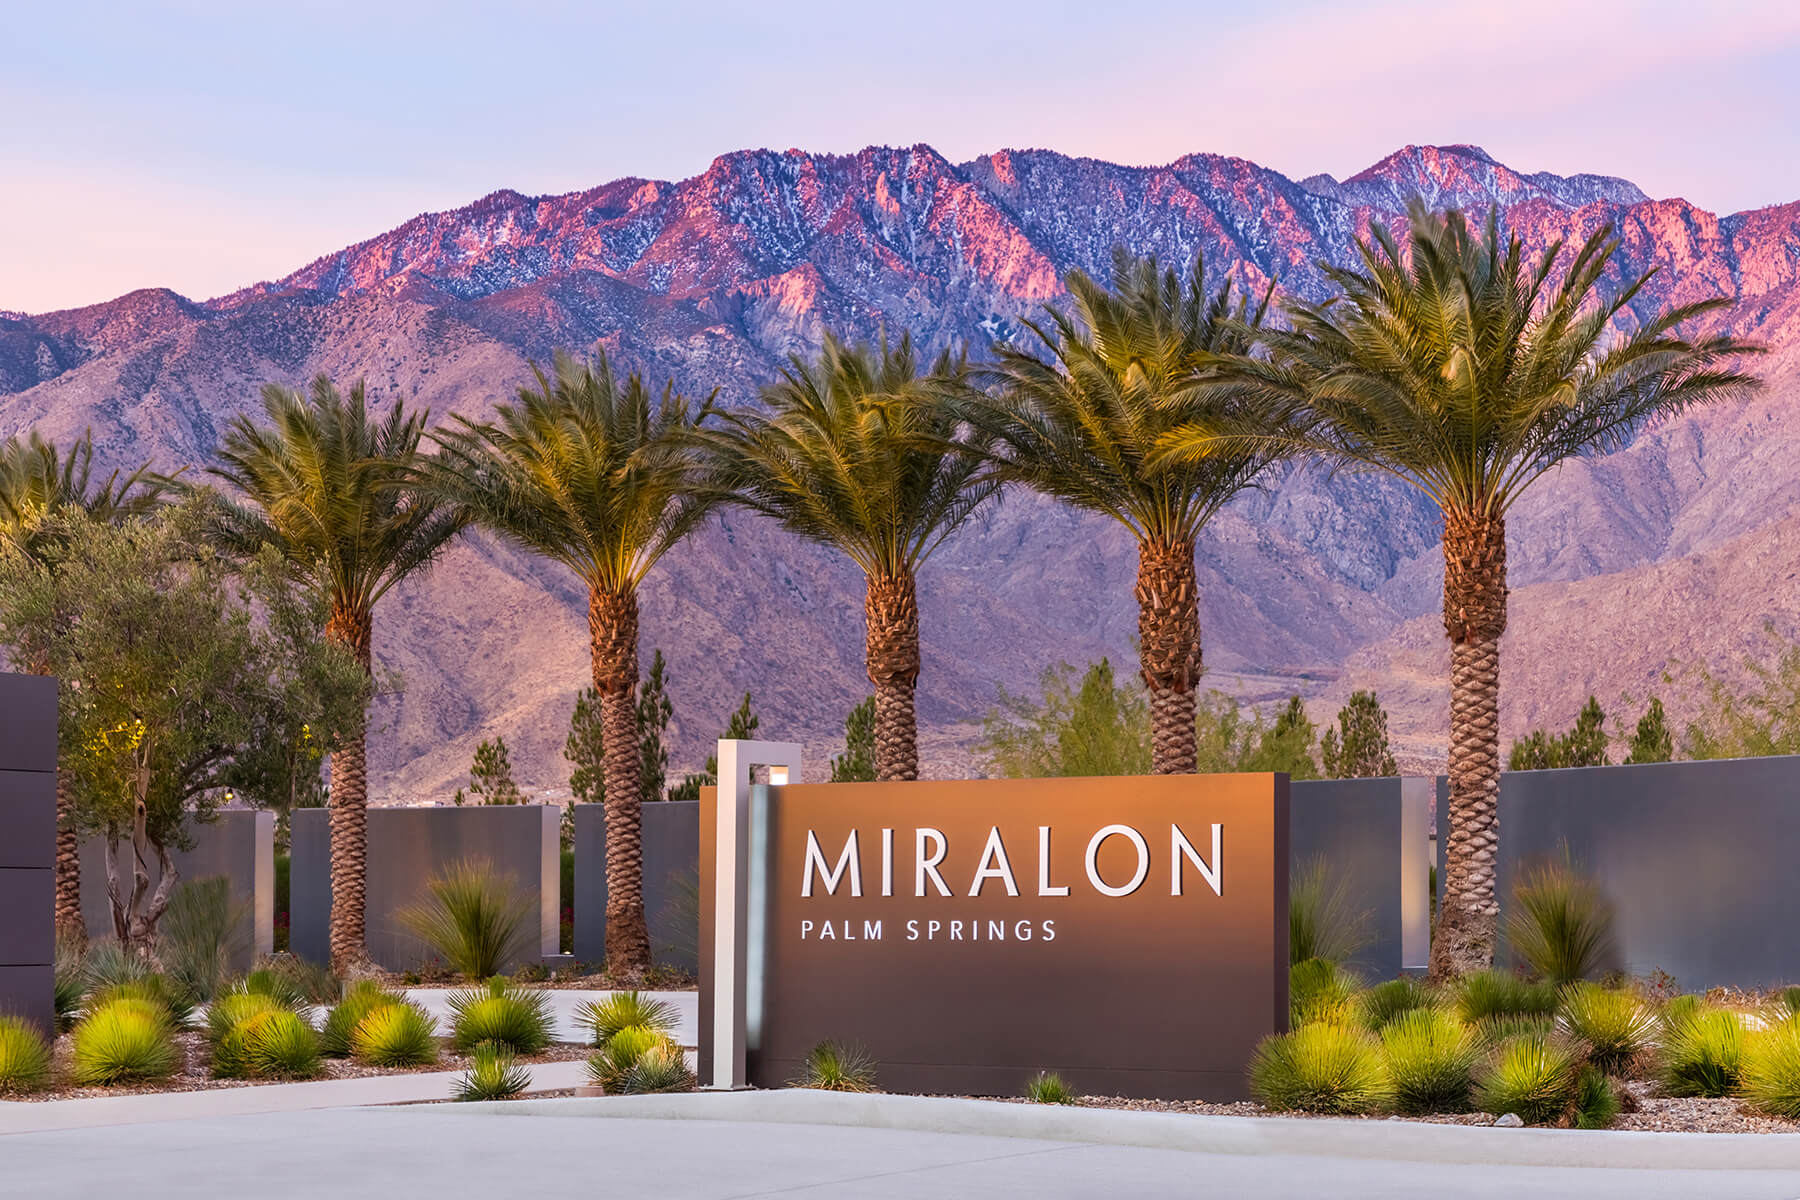 Miralon Club: new “agrihood” for California’s Palm Springs